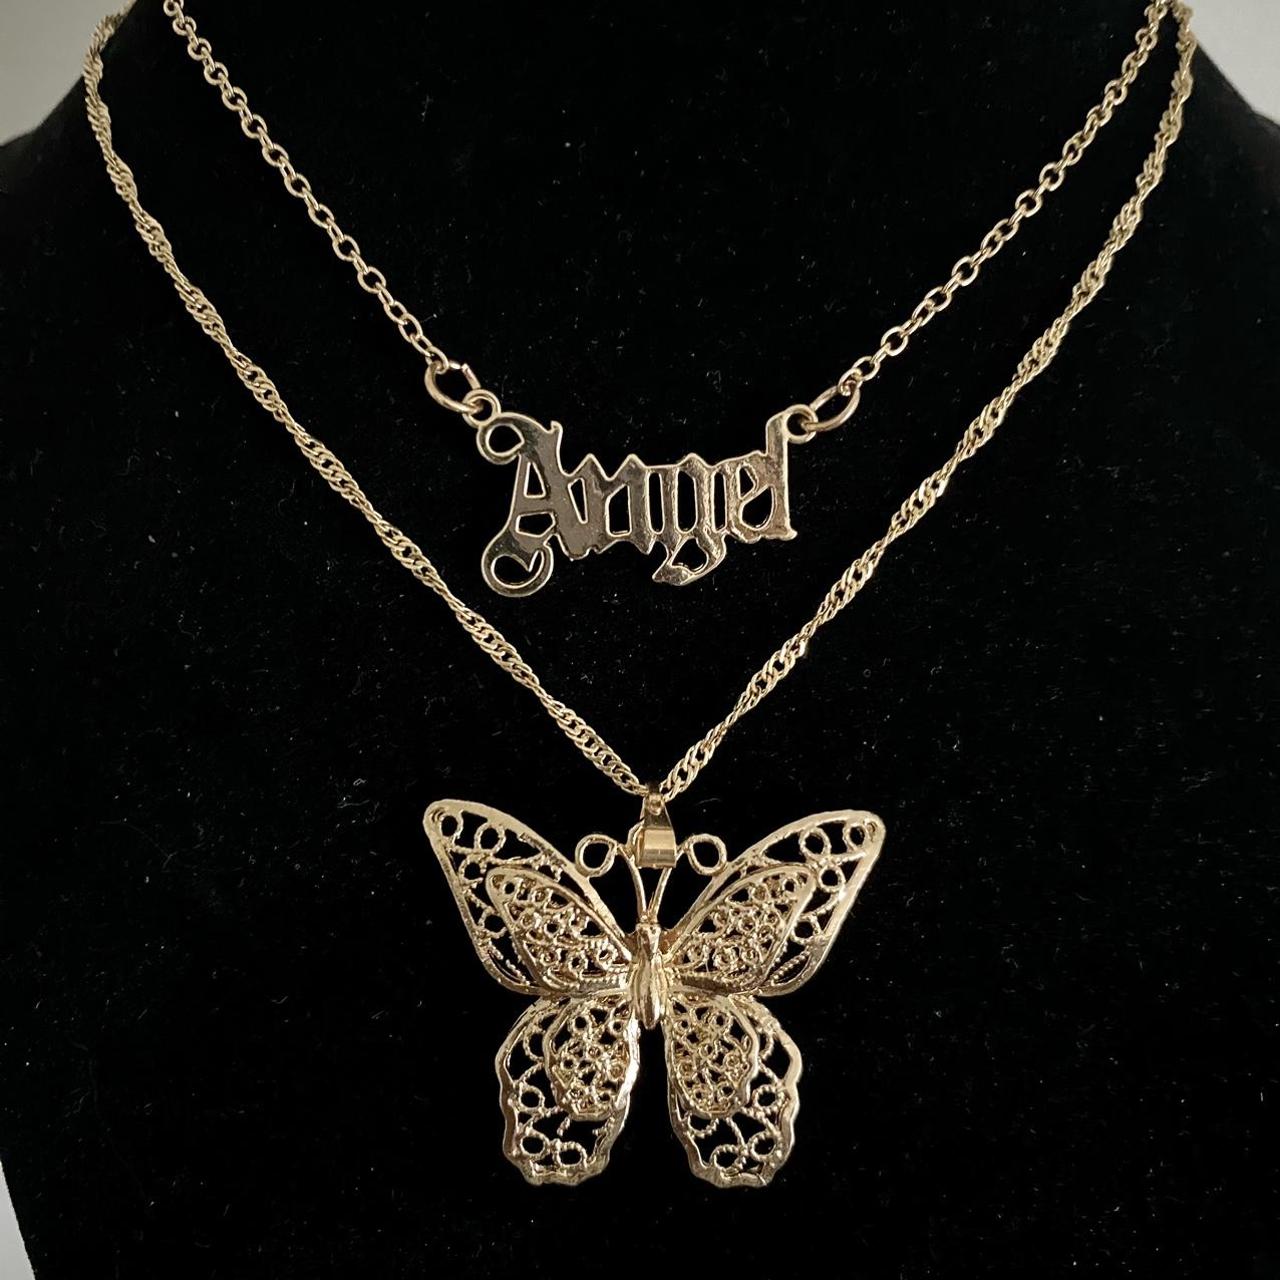 Gold Angel Necklace Set
Gold
“ANGEL” saying...